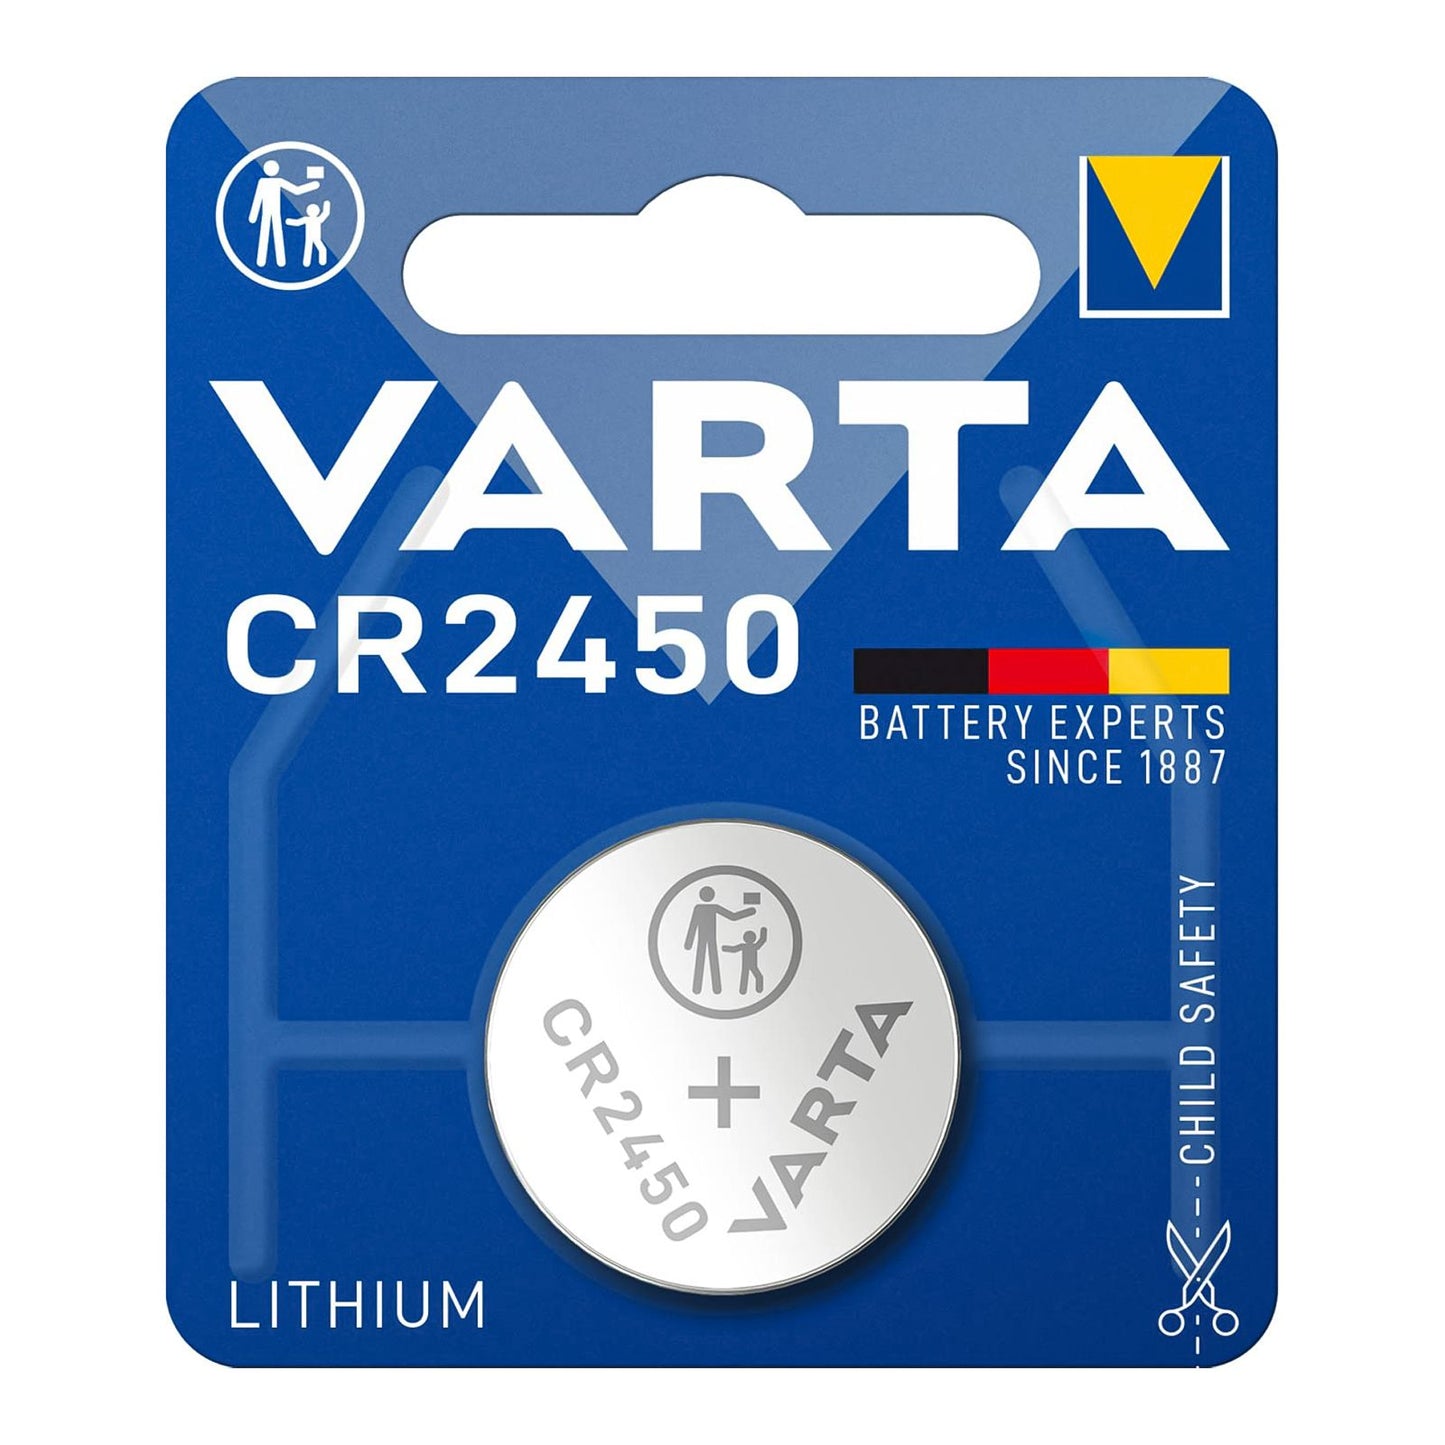 VARTA CR2450 Batteria al litio a bottone 3V, pila piatta, specialistica, diametro 24,5mm